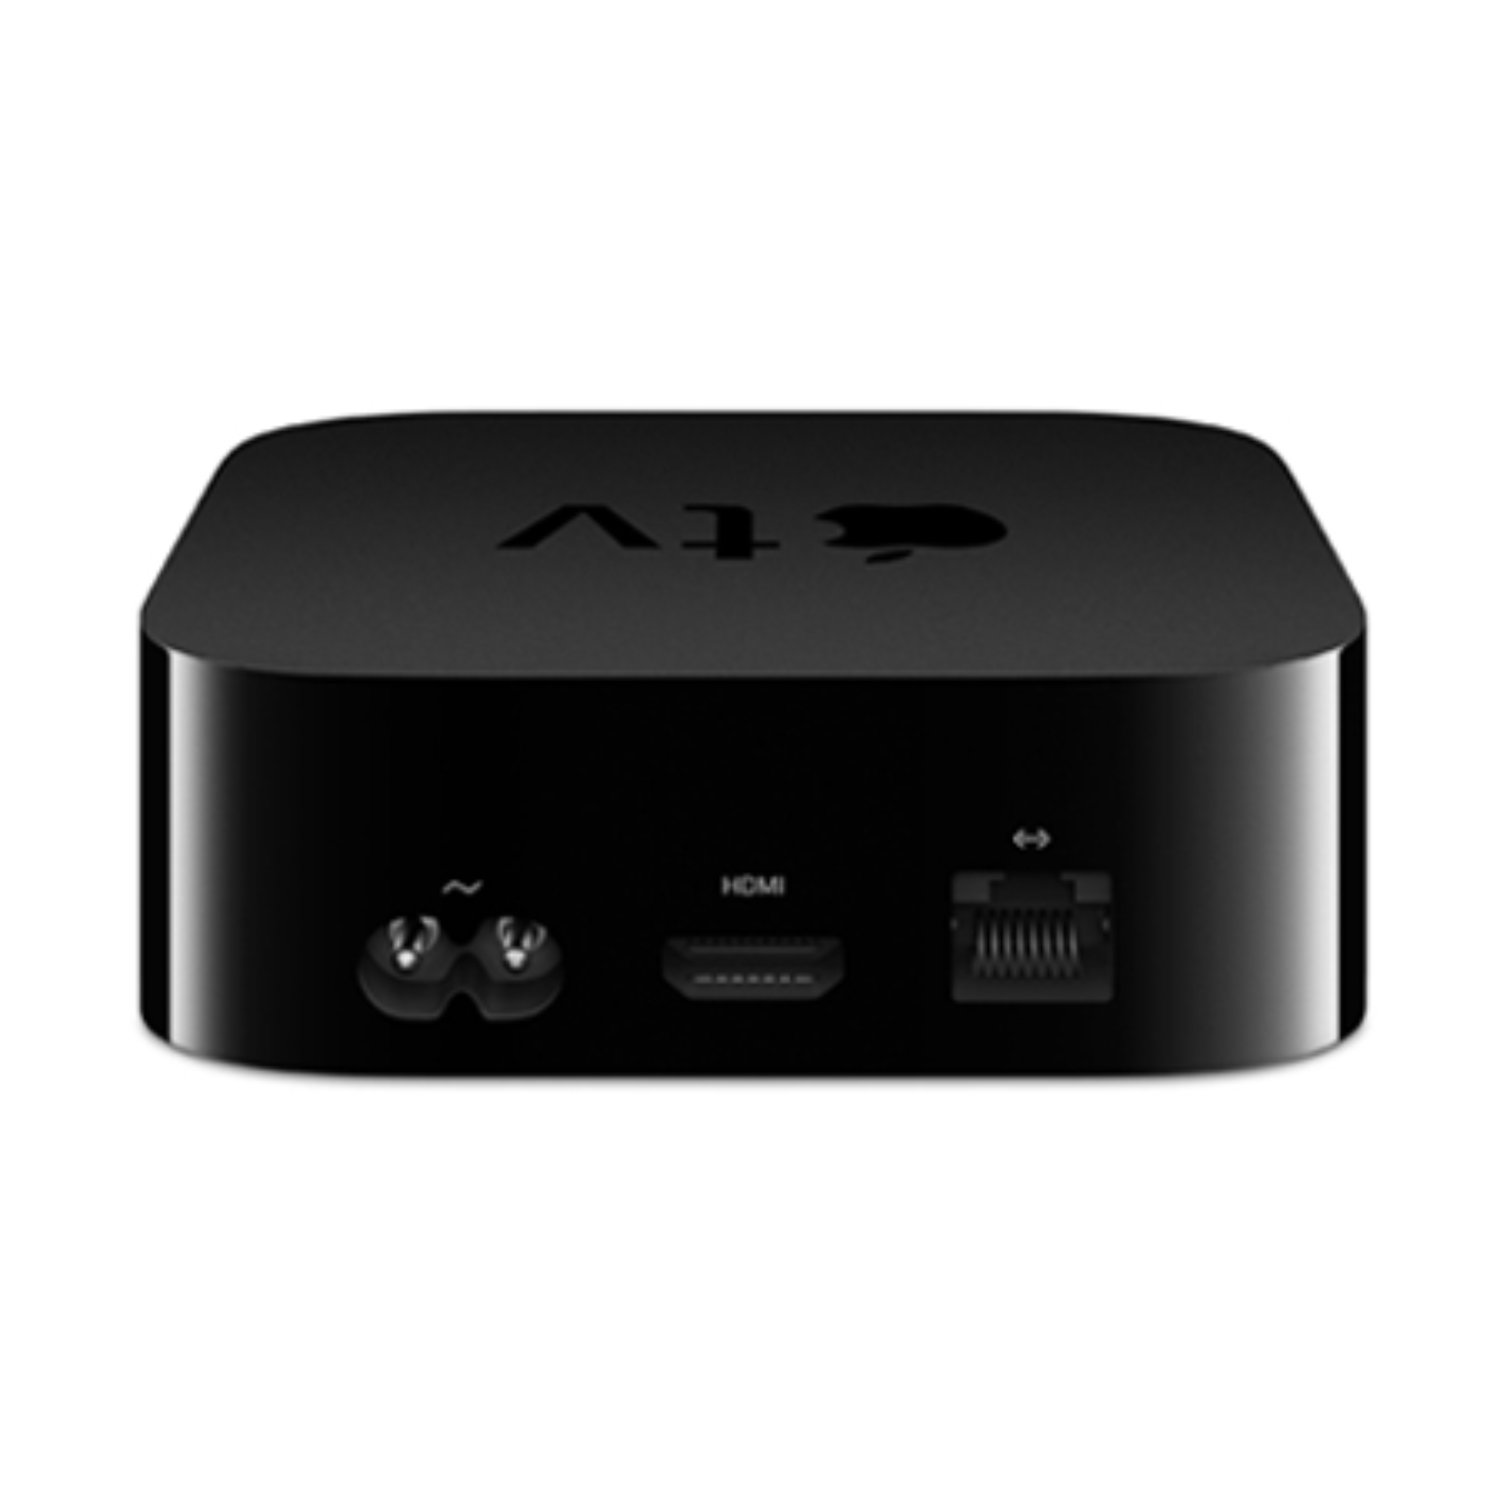 اپل تی وی 1080P HD نسل چهارم 32گیگ وایفای+اترنت Apple TV 1080P HD (4rd Gen) wifi With ethernet 32GB 2015 MHY93 